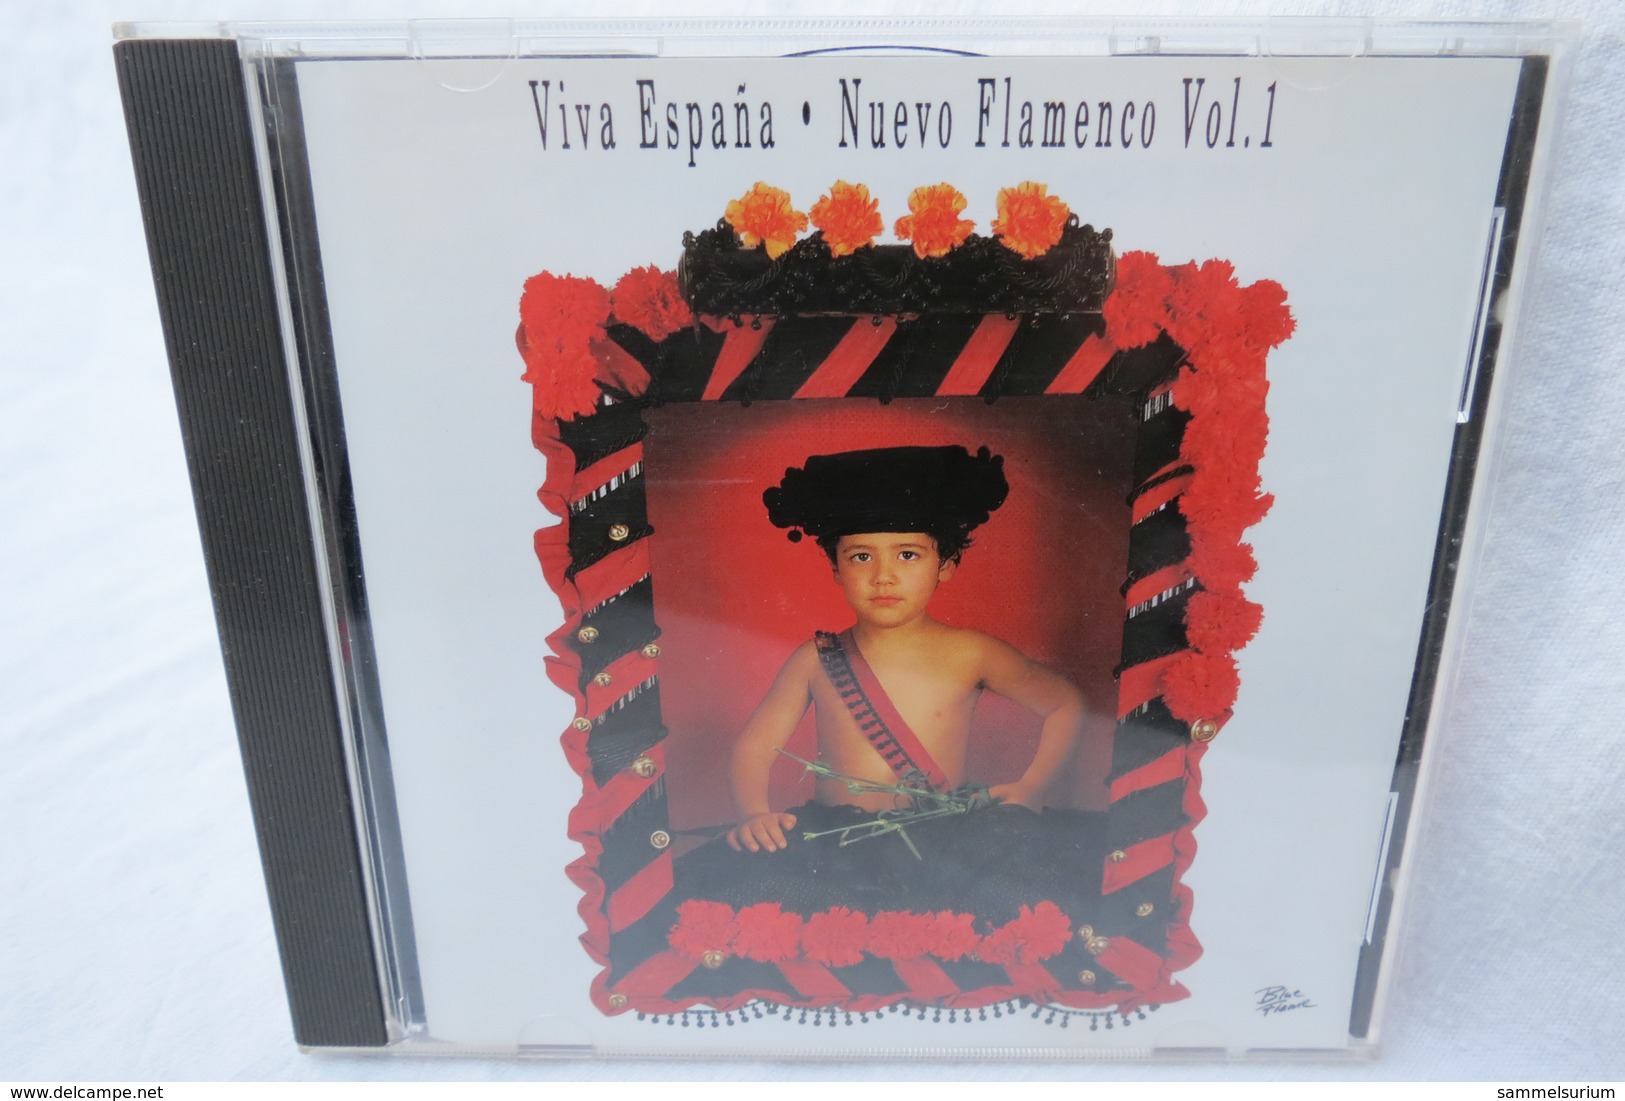 CD "Viva Espana" Nuevo Flamenco Vol. 1 - Sonstige - Spanische Musik